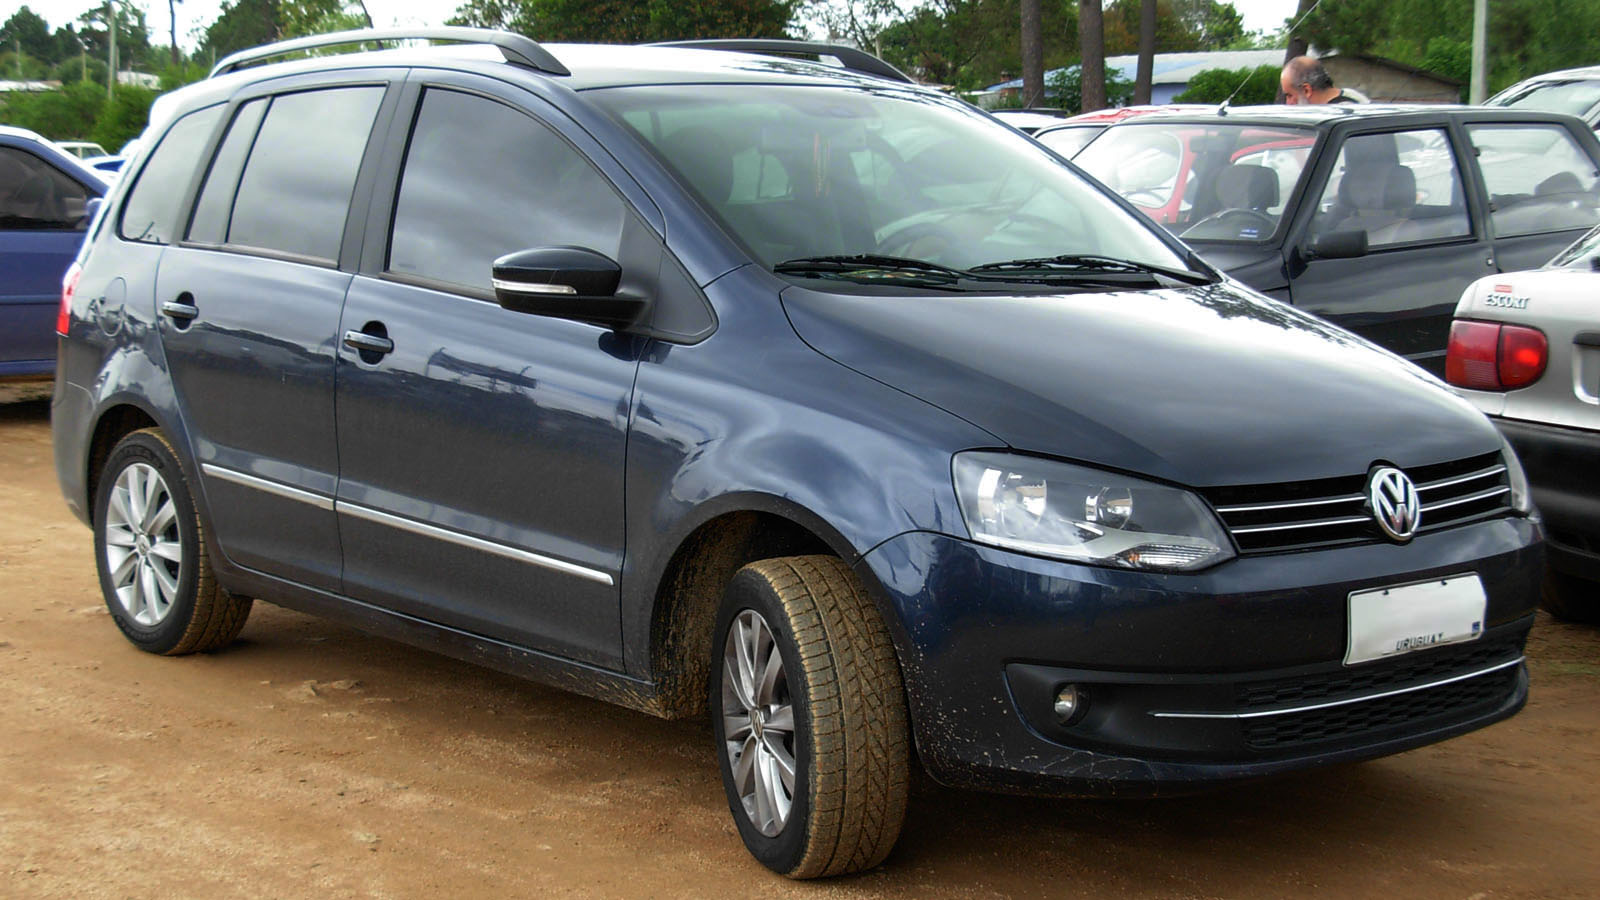 File:Volkswagen Suran 2010 - blue front.jpg